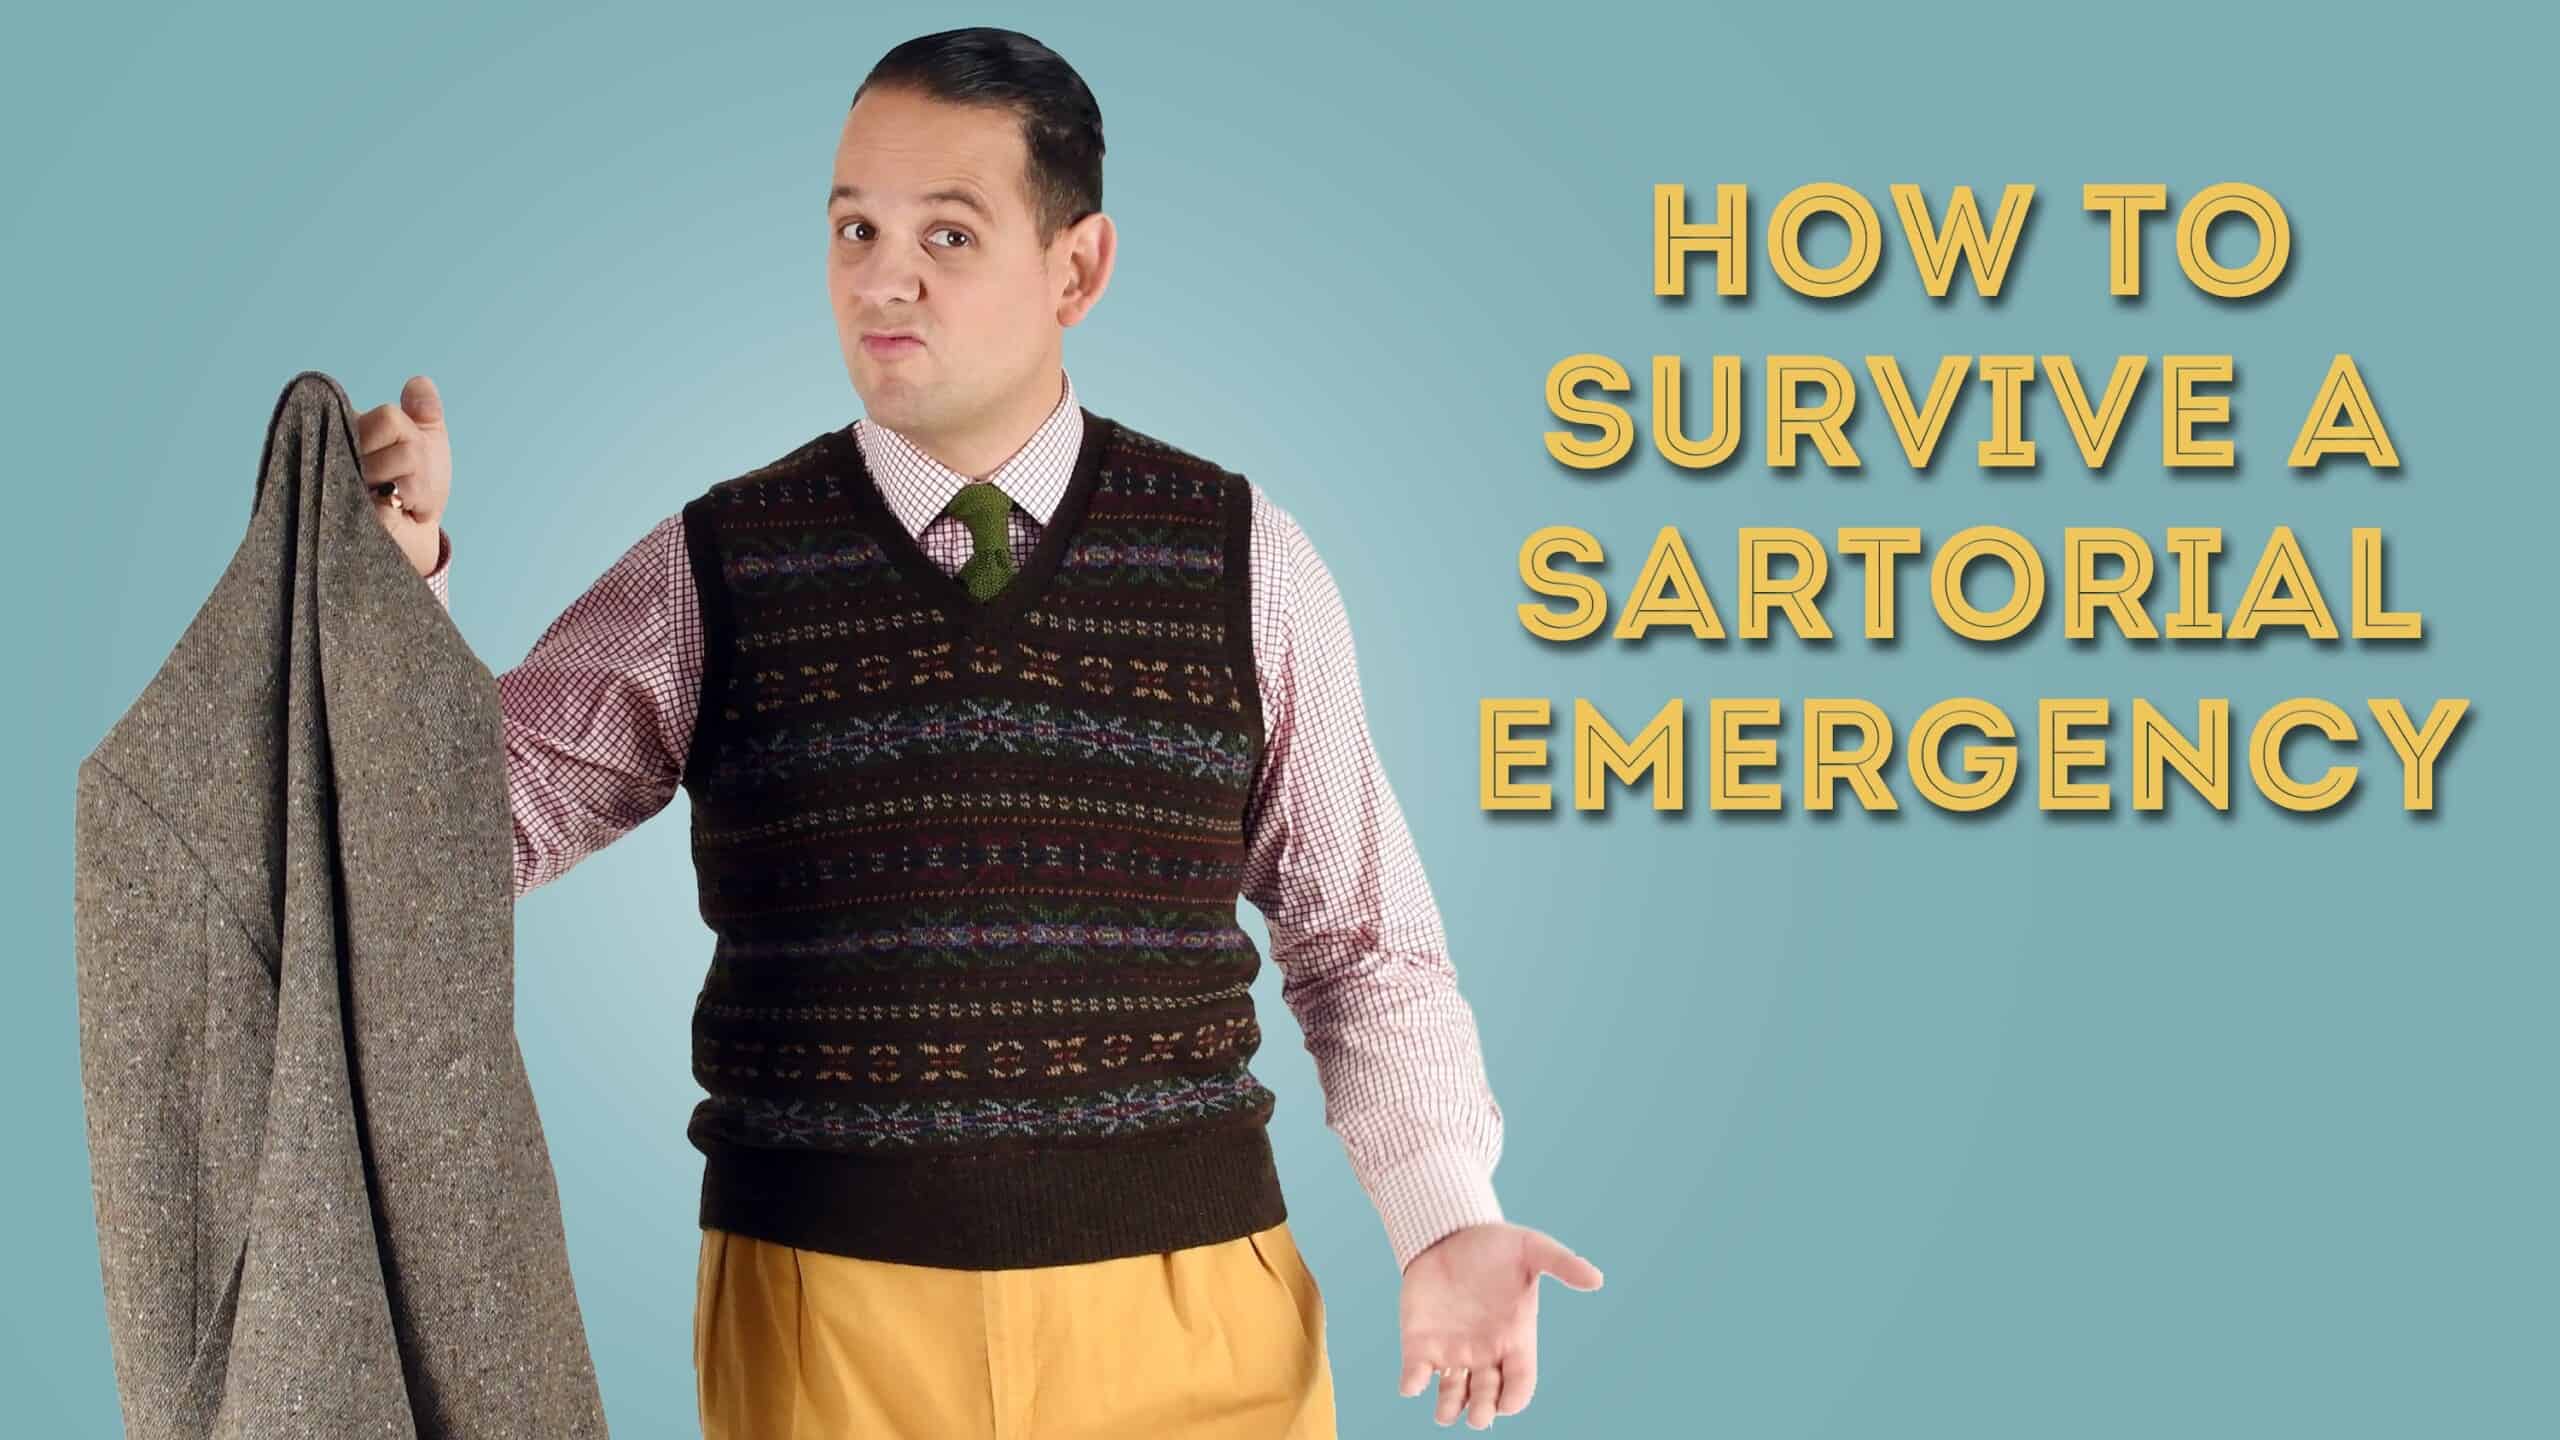 sartorial-emergency-survival_3840x2160-scaled.jpg